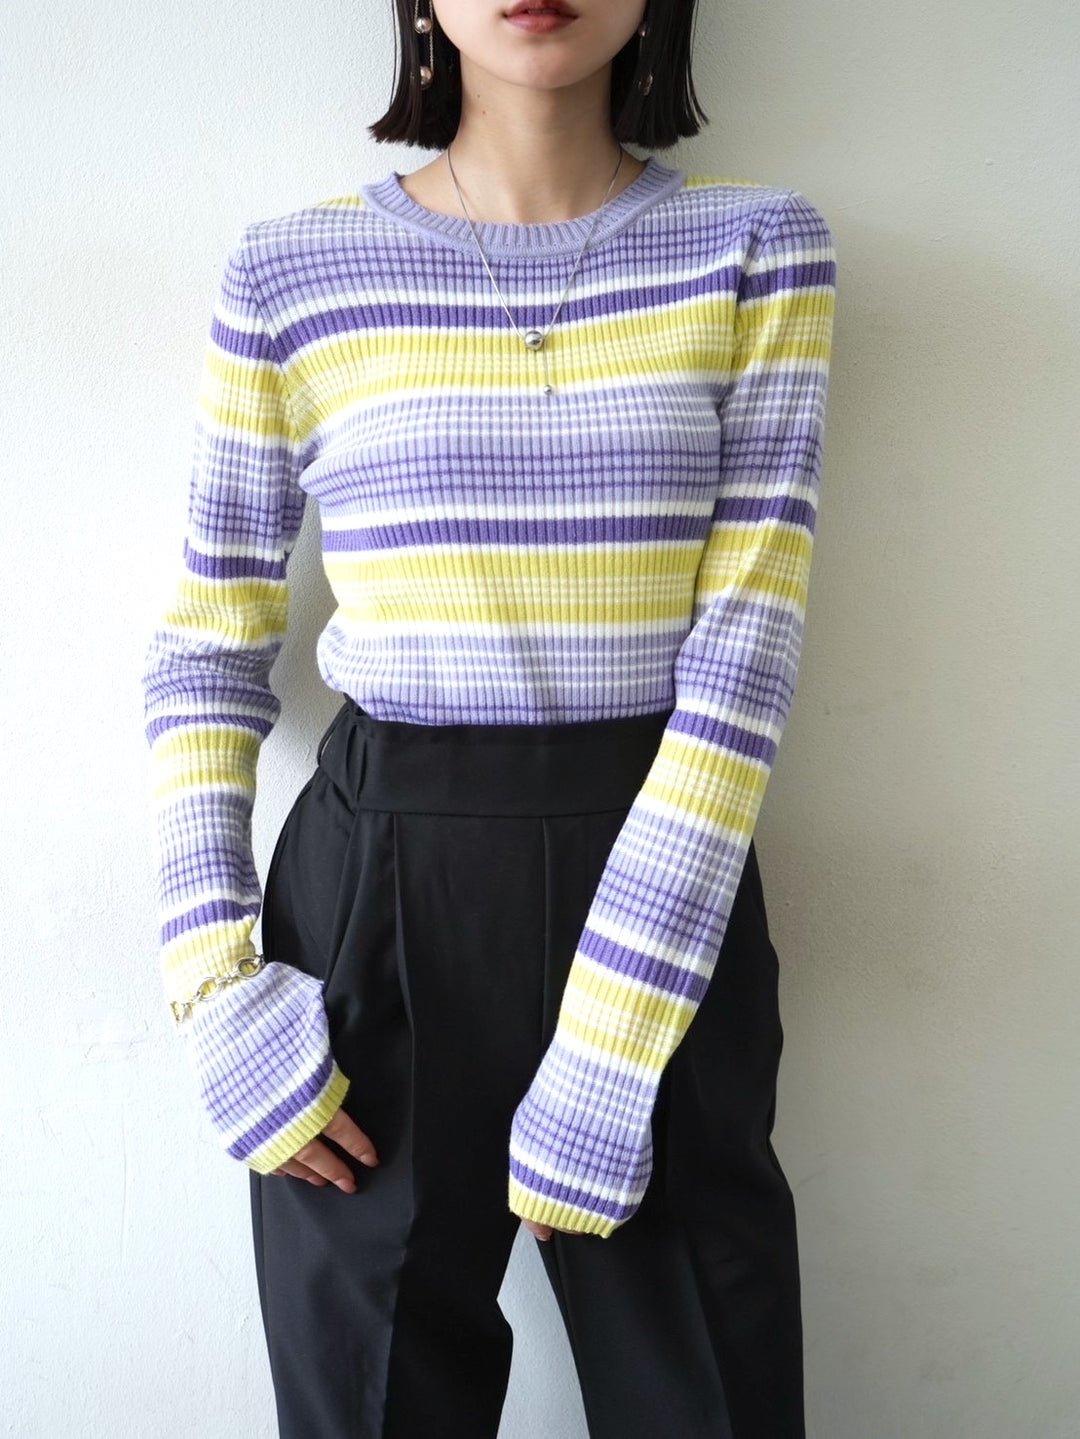 Fingerhole rib knit top/yellow purple